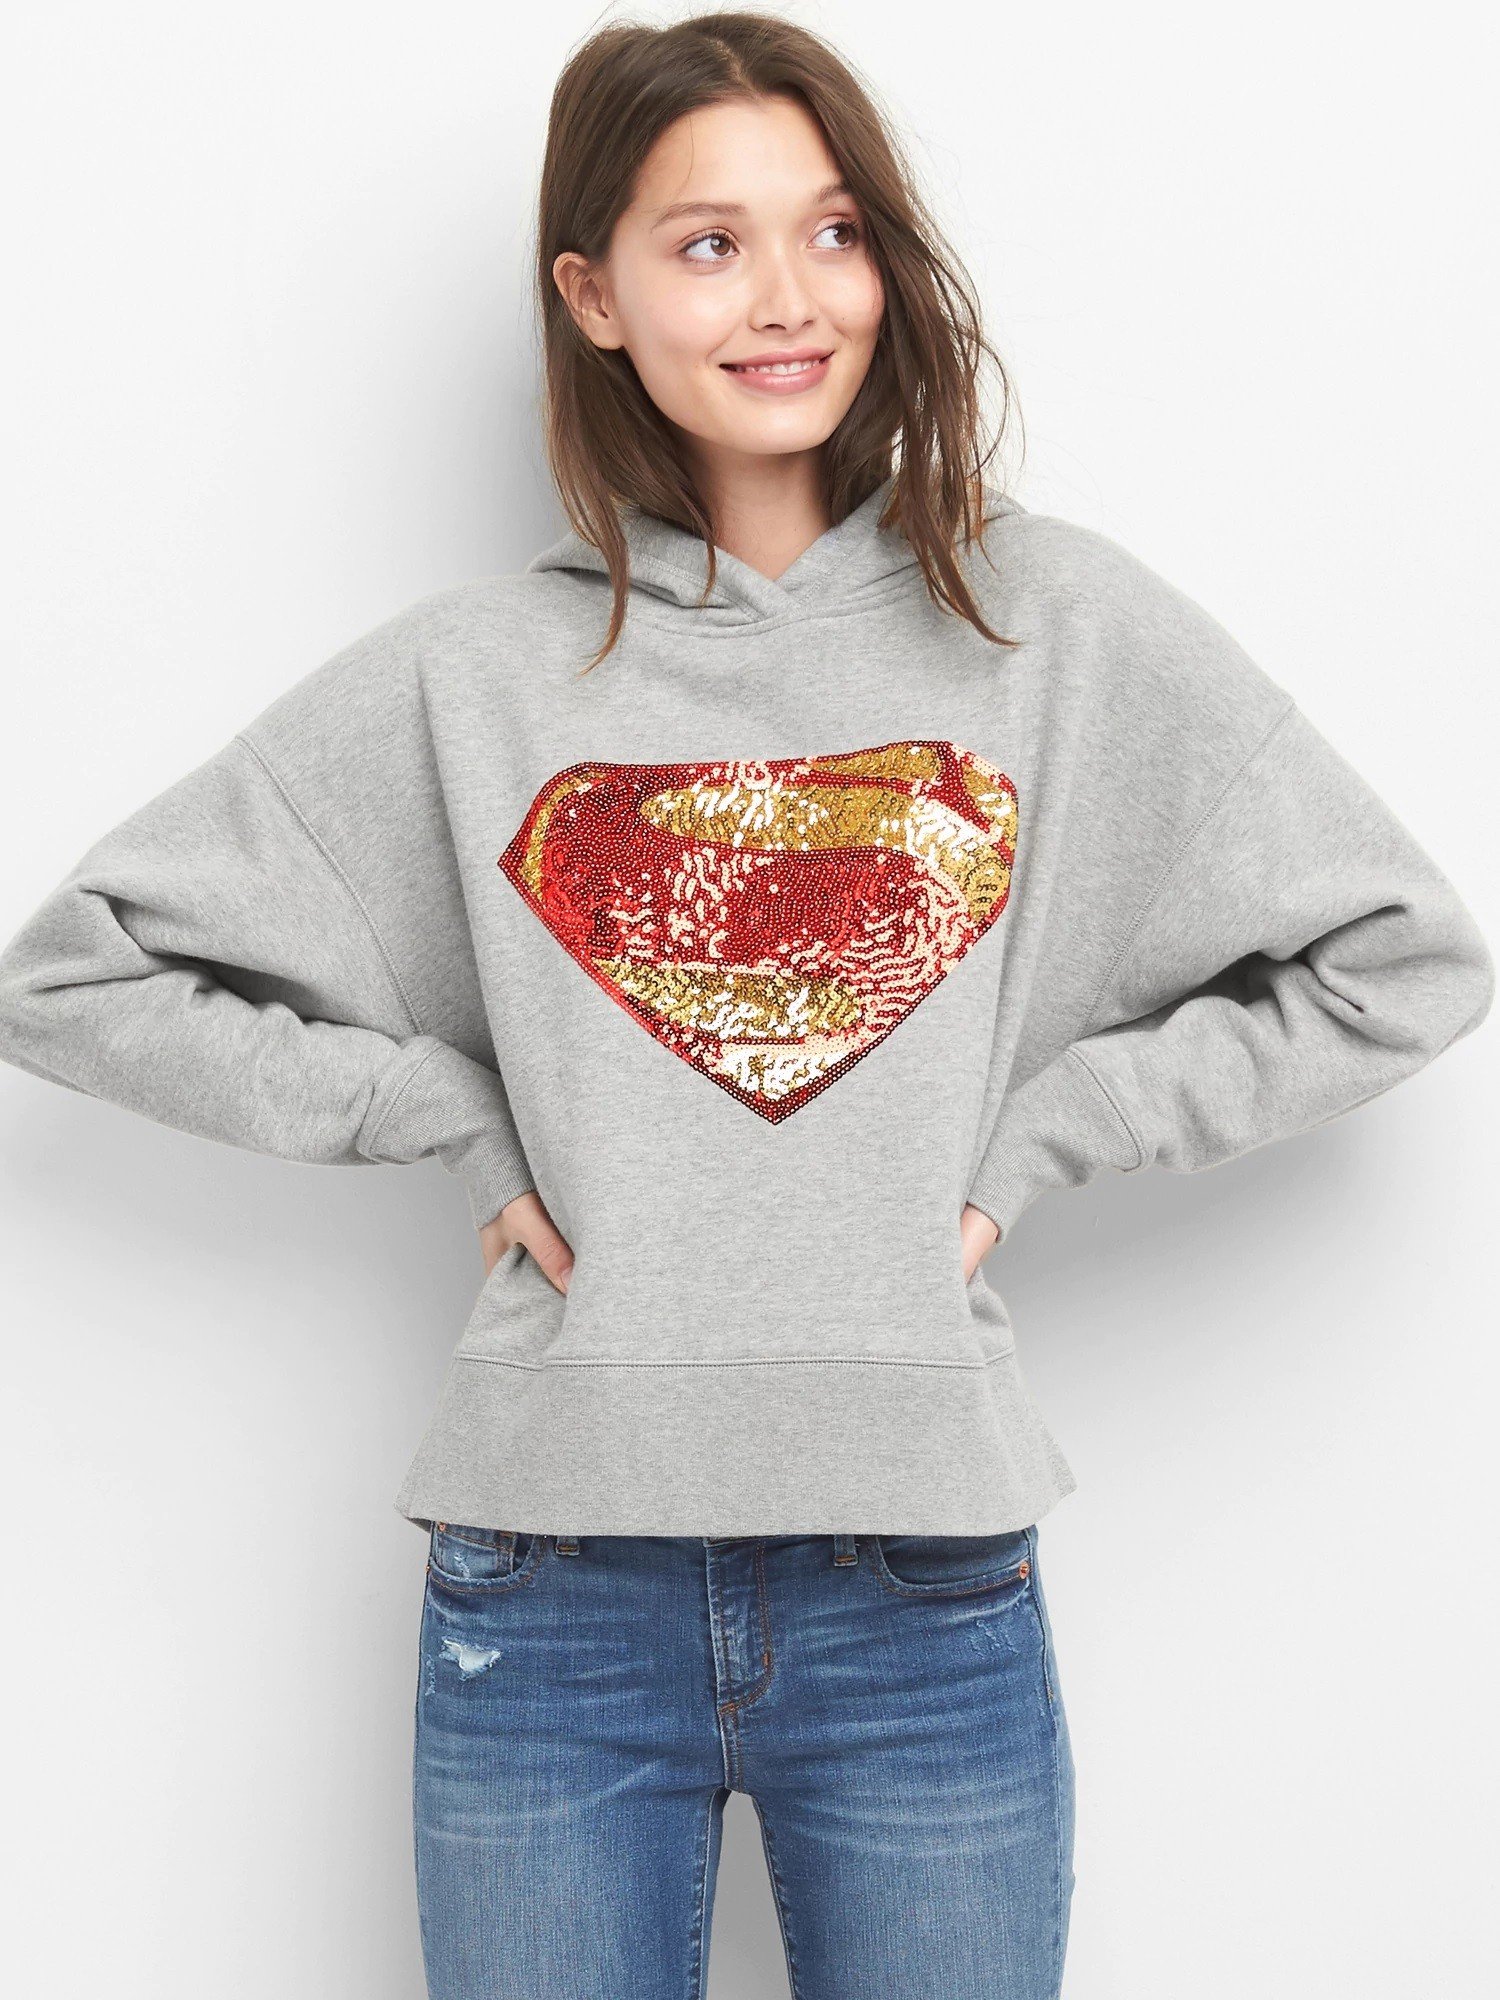 Gap | DC™ Superman pullu sweatshirt product image